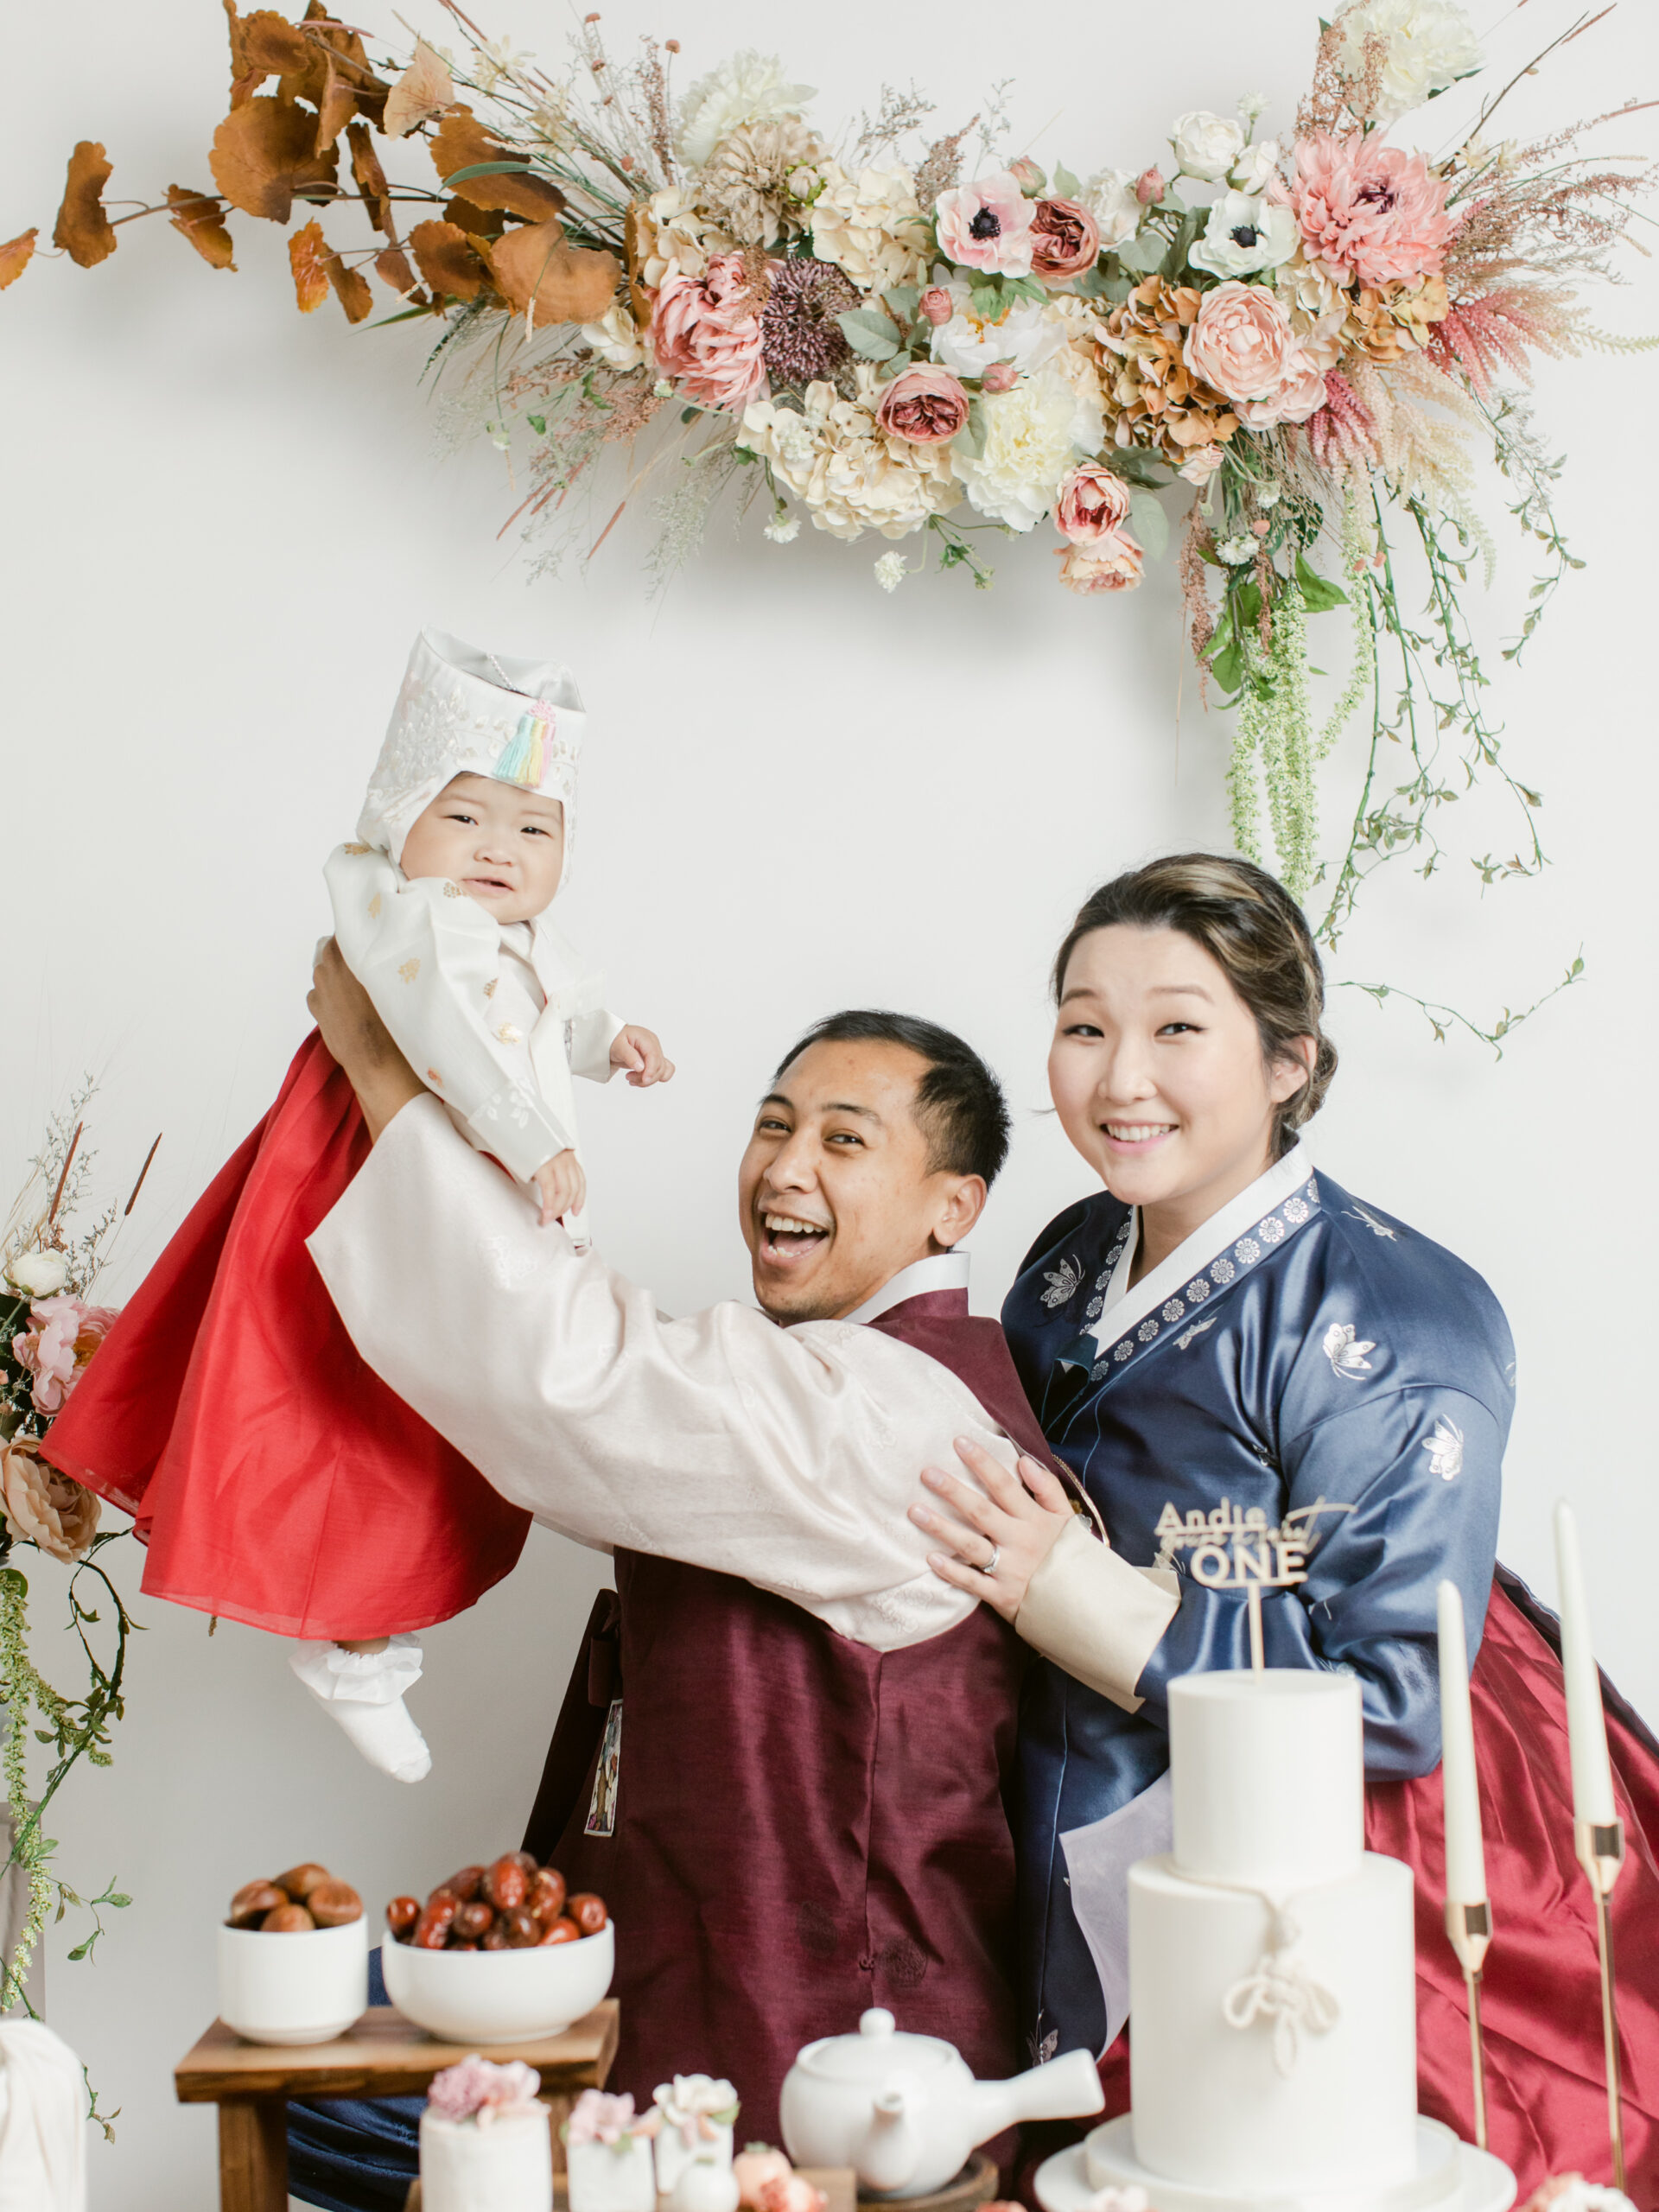 Why Take Family Photos in Hanbok